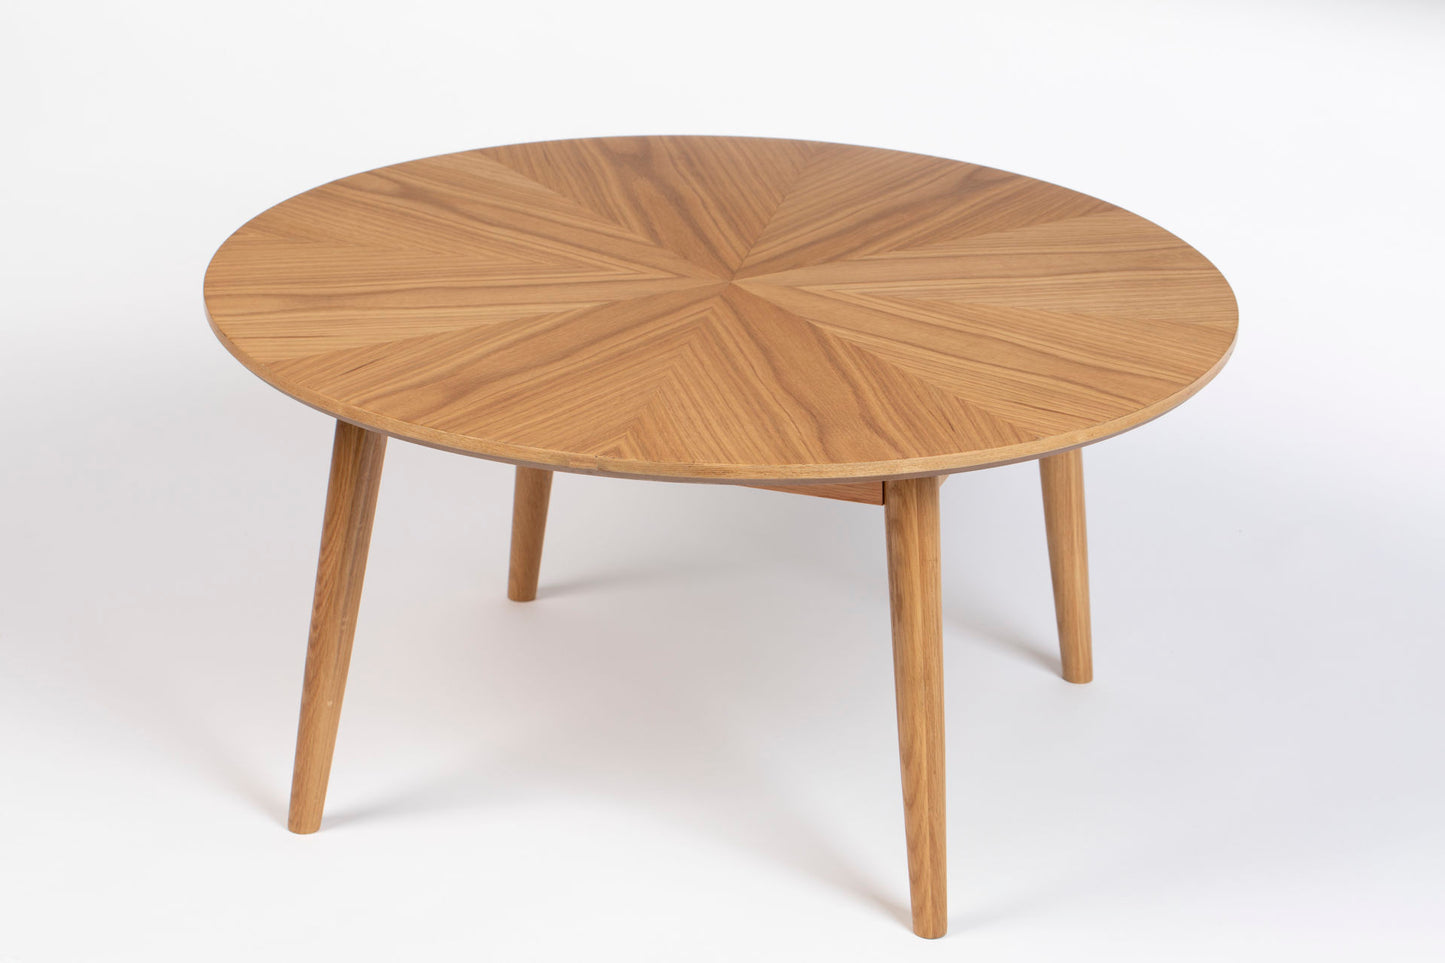 Nancy's Red Bank Coffee Table - Modern - Brown - Oak, Mdf - 80 cm x 80 cm x 40 cm